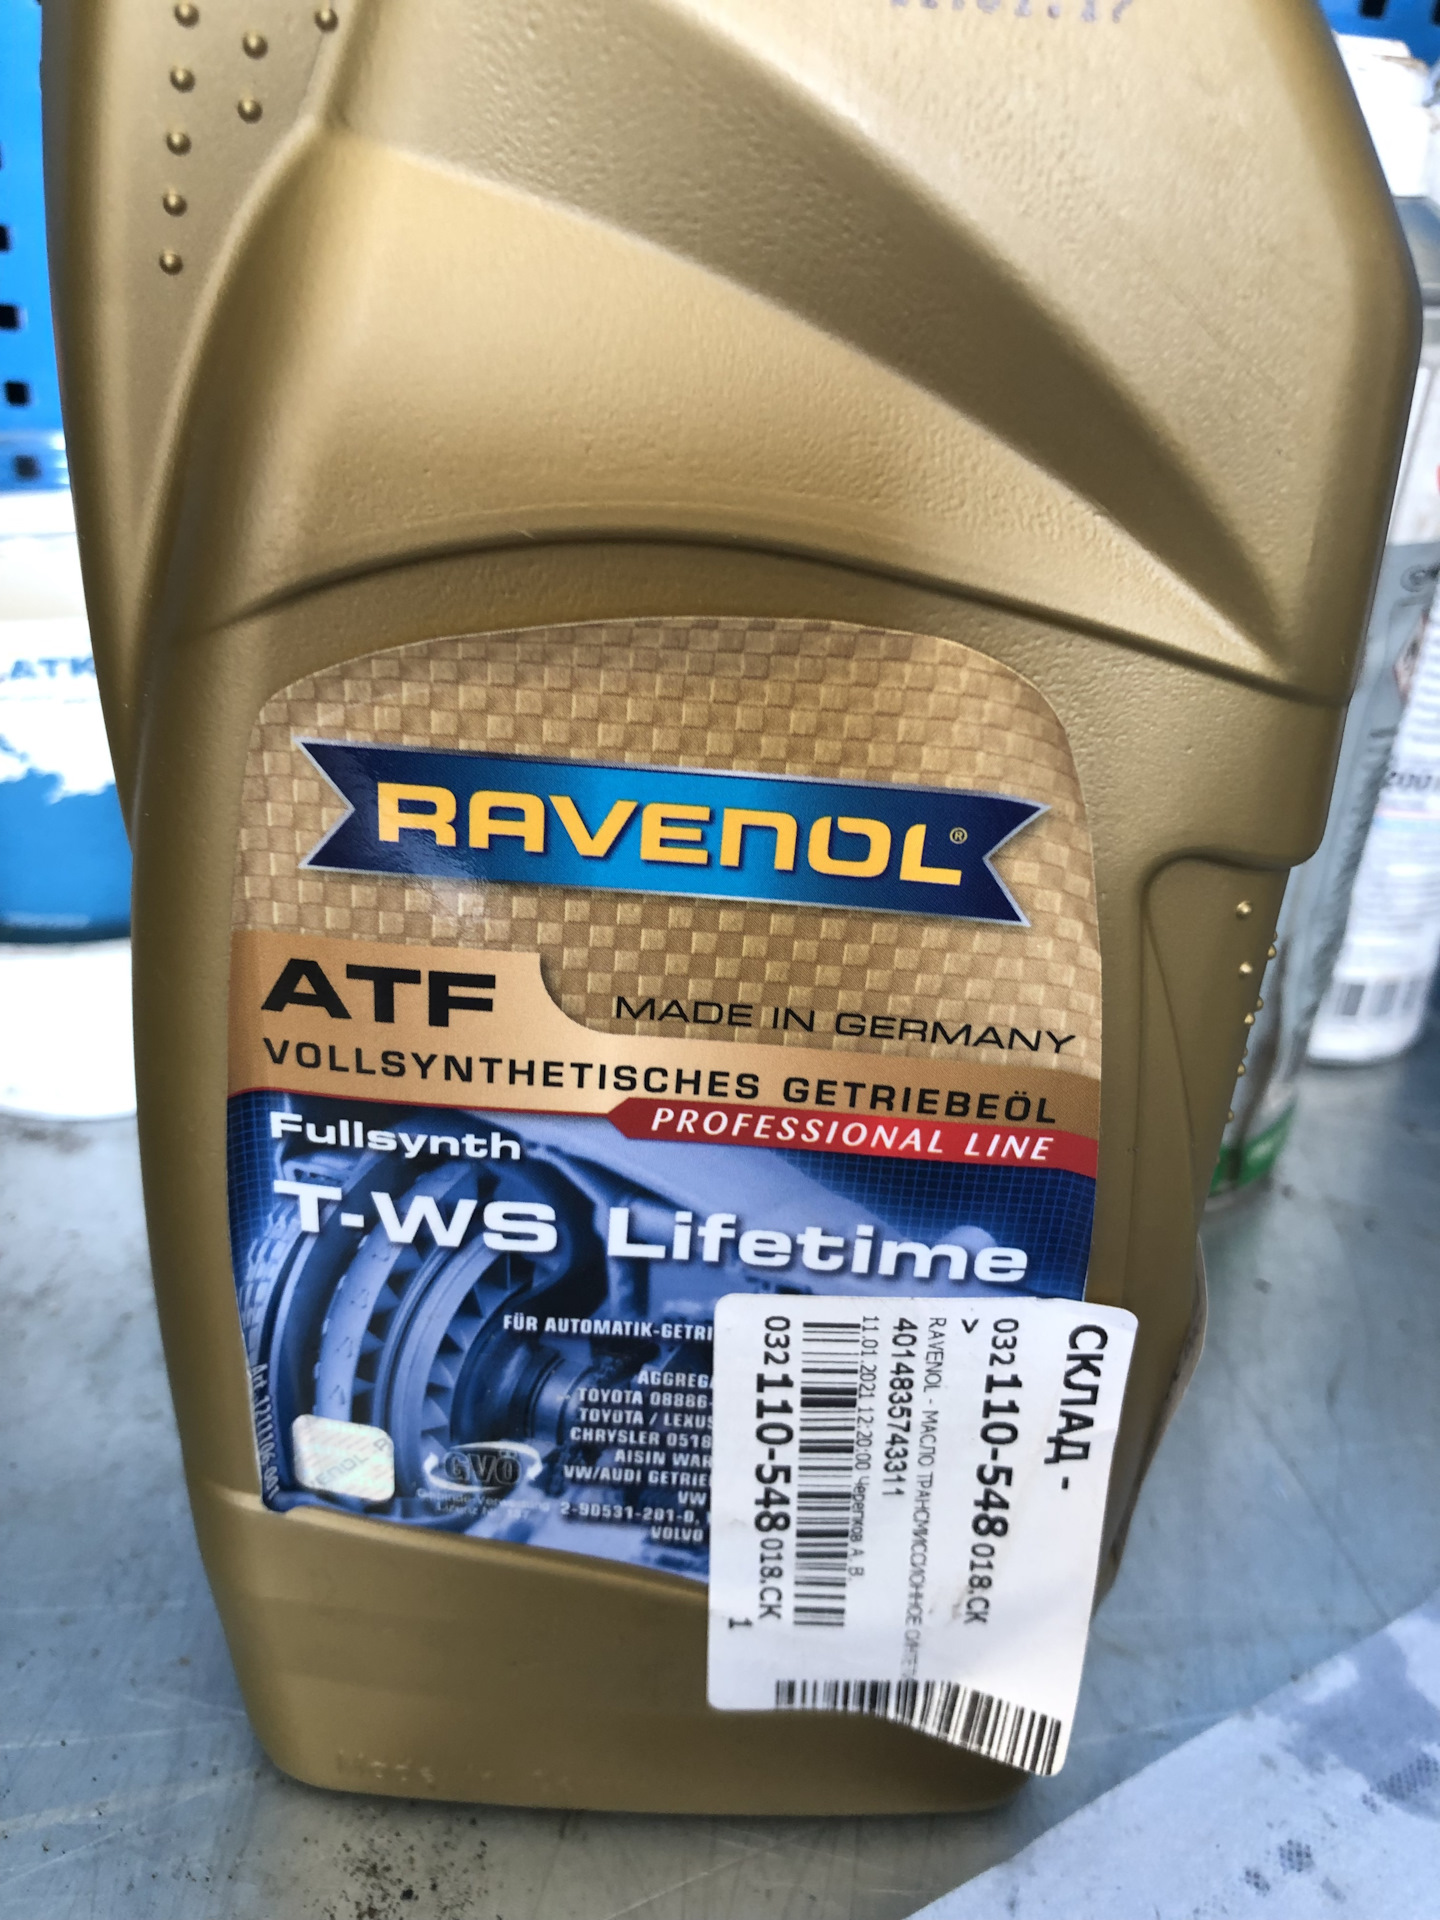 Ravenol atf ws lifetime. Ravenol ATF T-WS Lifetime. Масло в коробке Равенол цвет. Замена масла в АКПП Порше Кайен. Ravenol ATF TVS Lifetime в Кемерово цена.